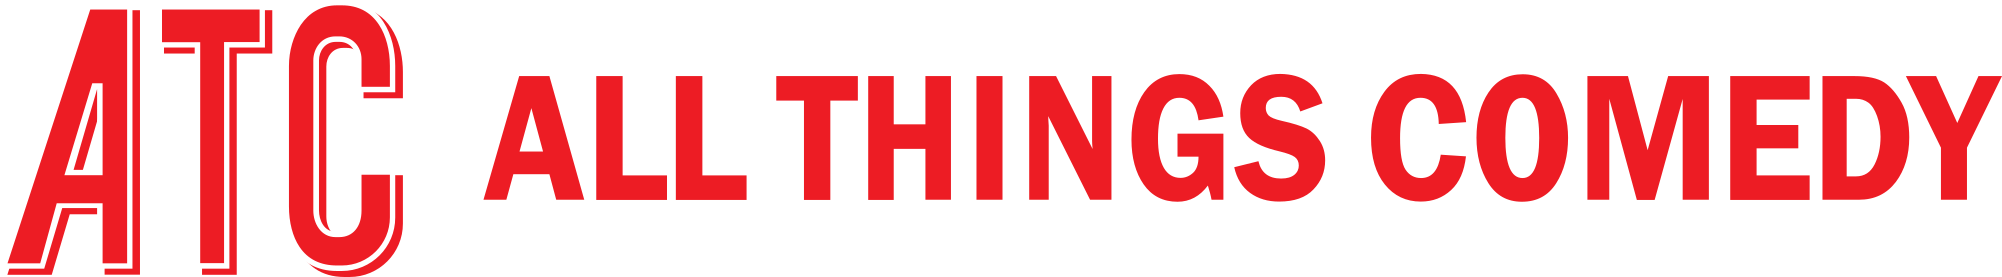 All Things Comedy Logo